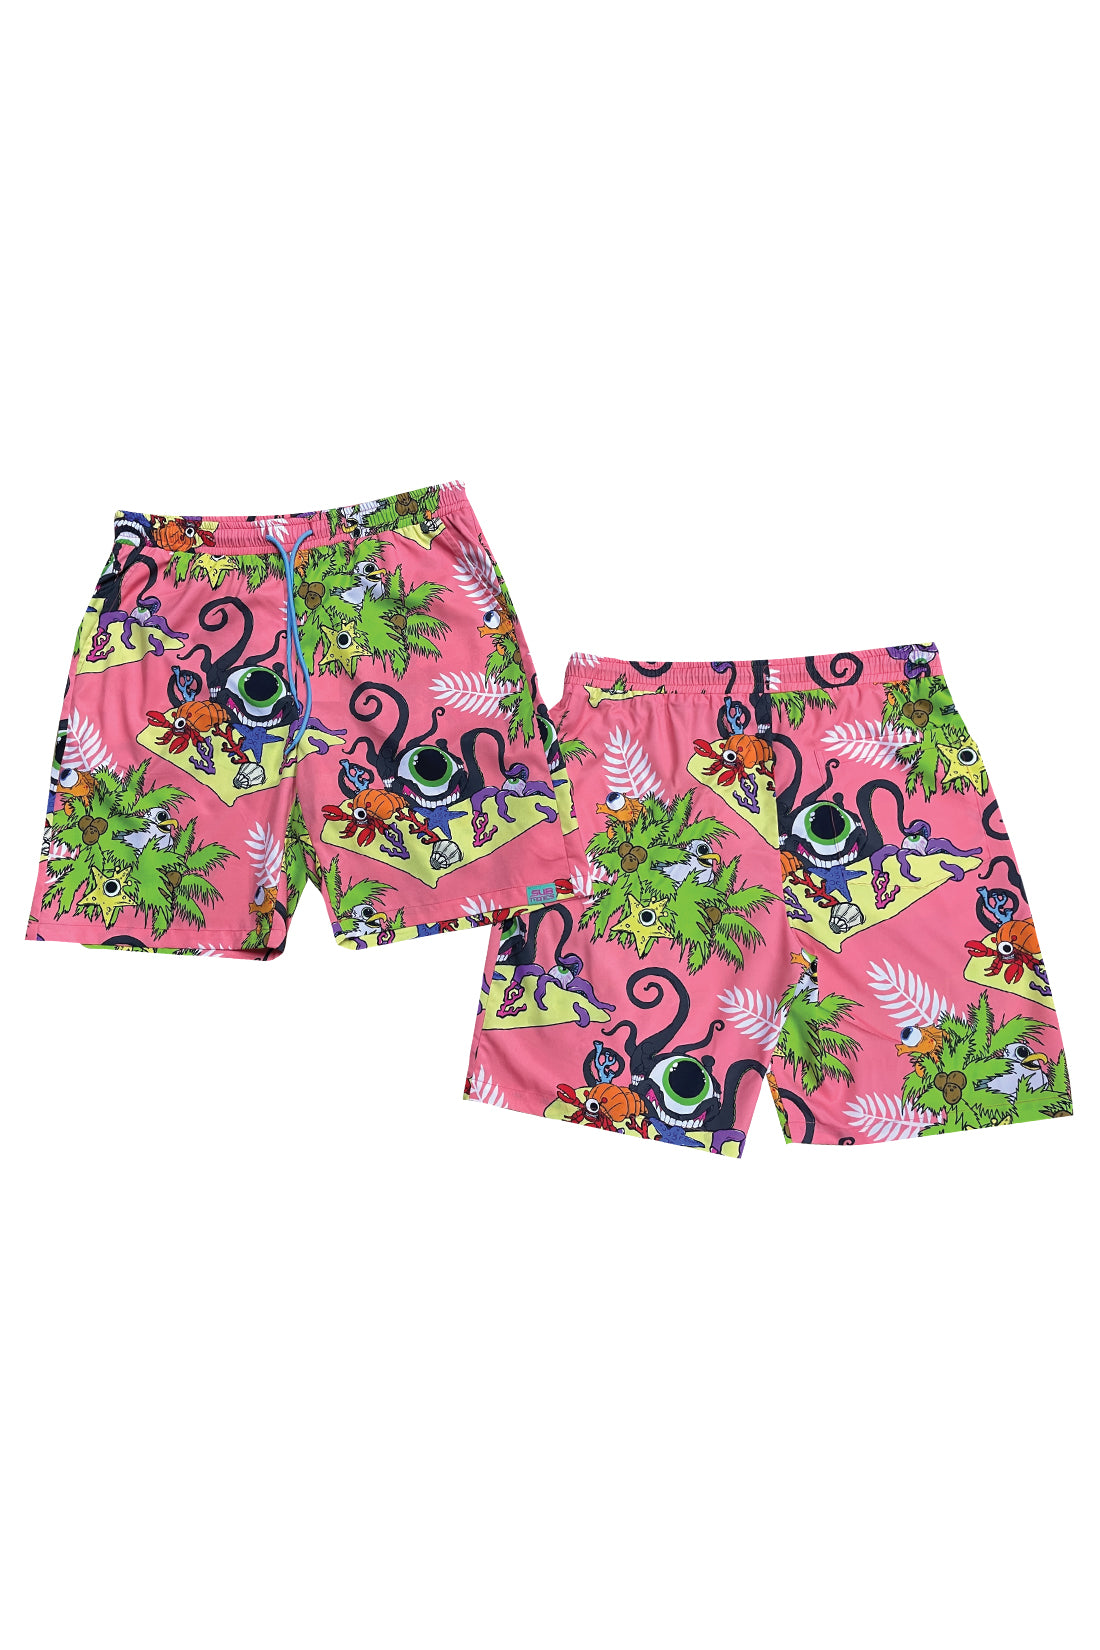 Cyclops Cove 2  - Tropical Men's Shorts